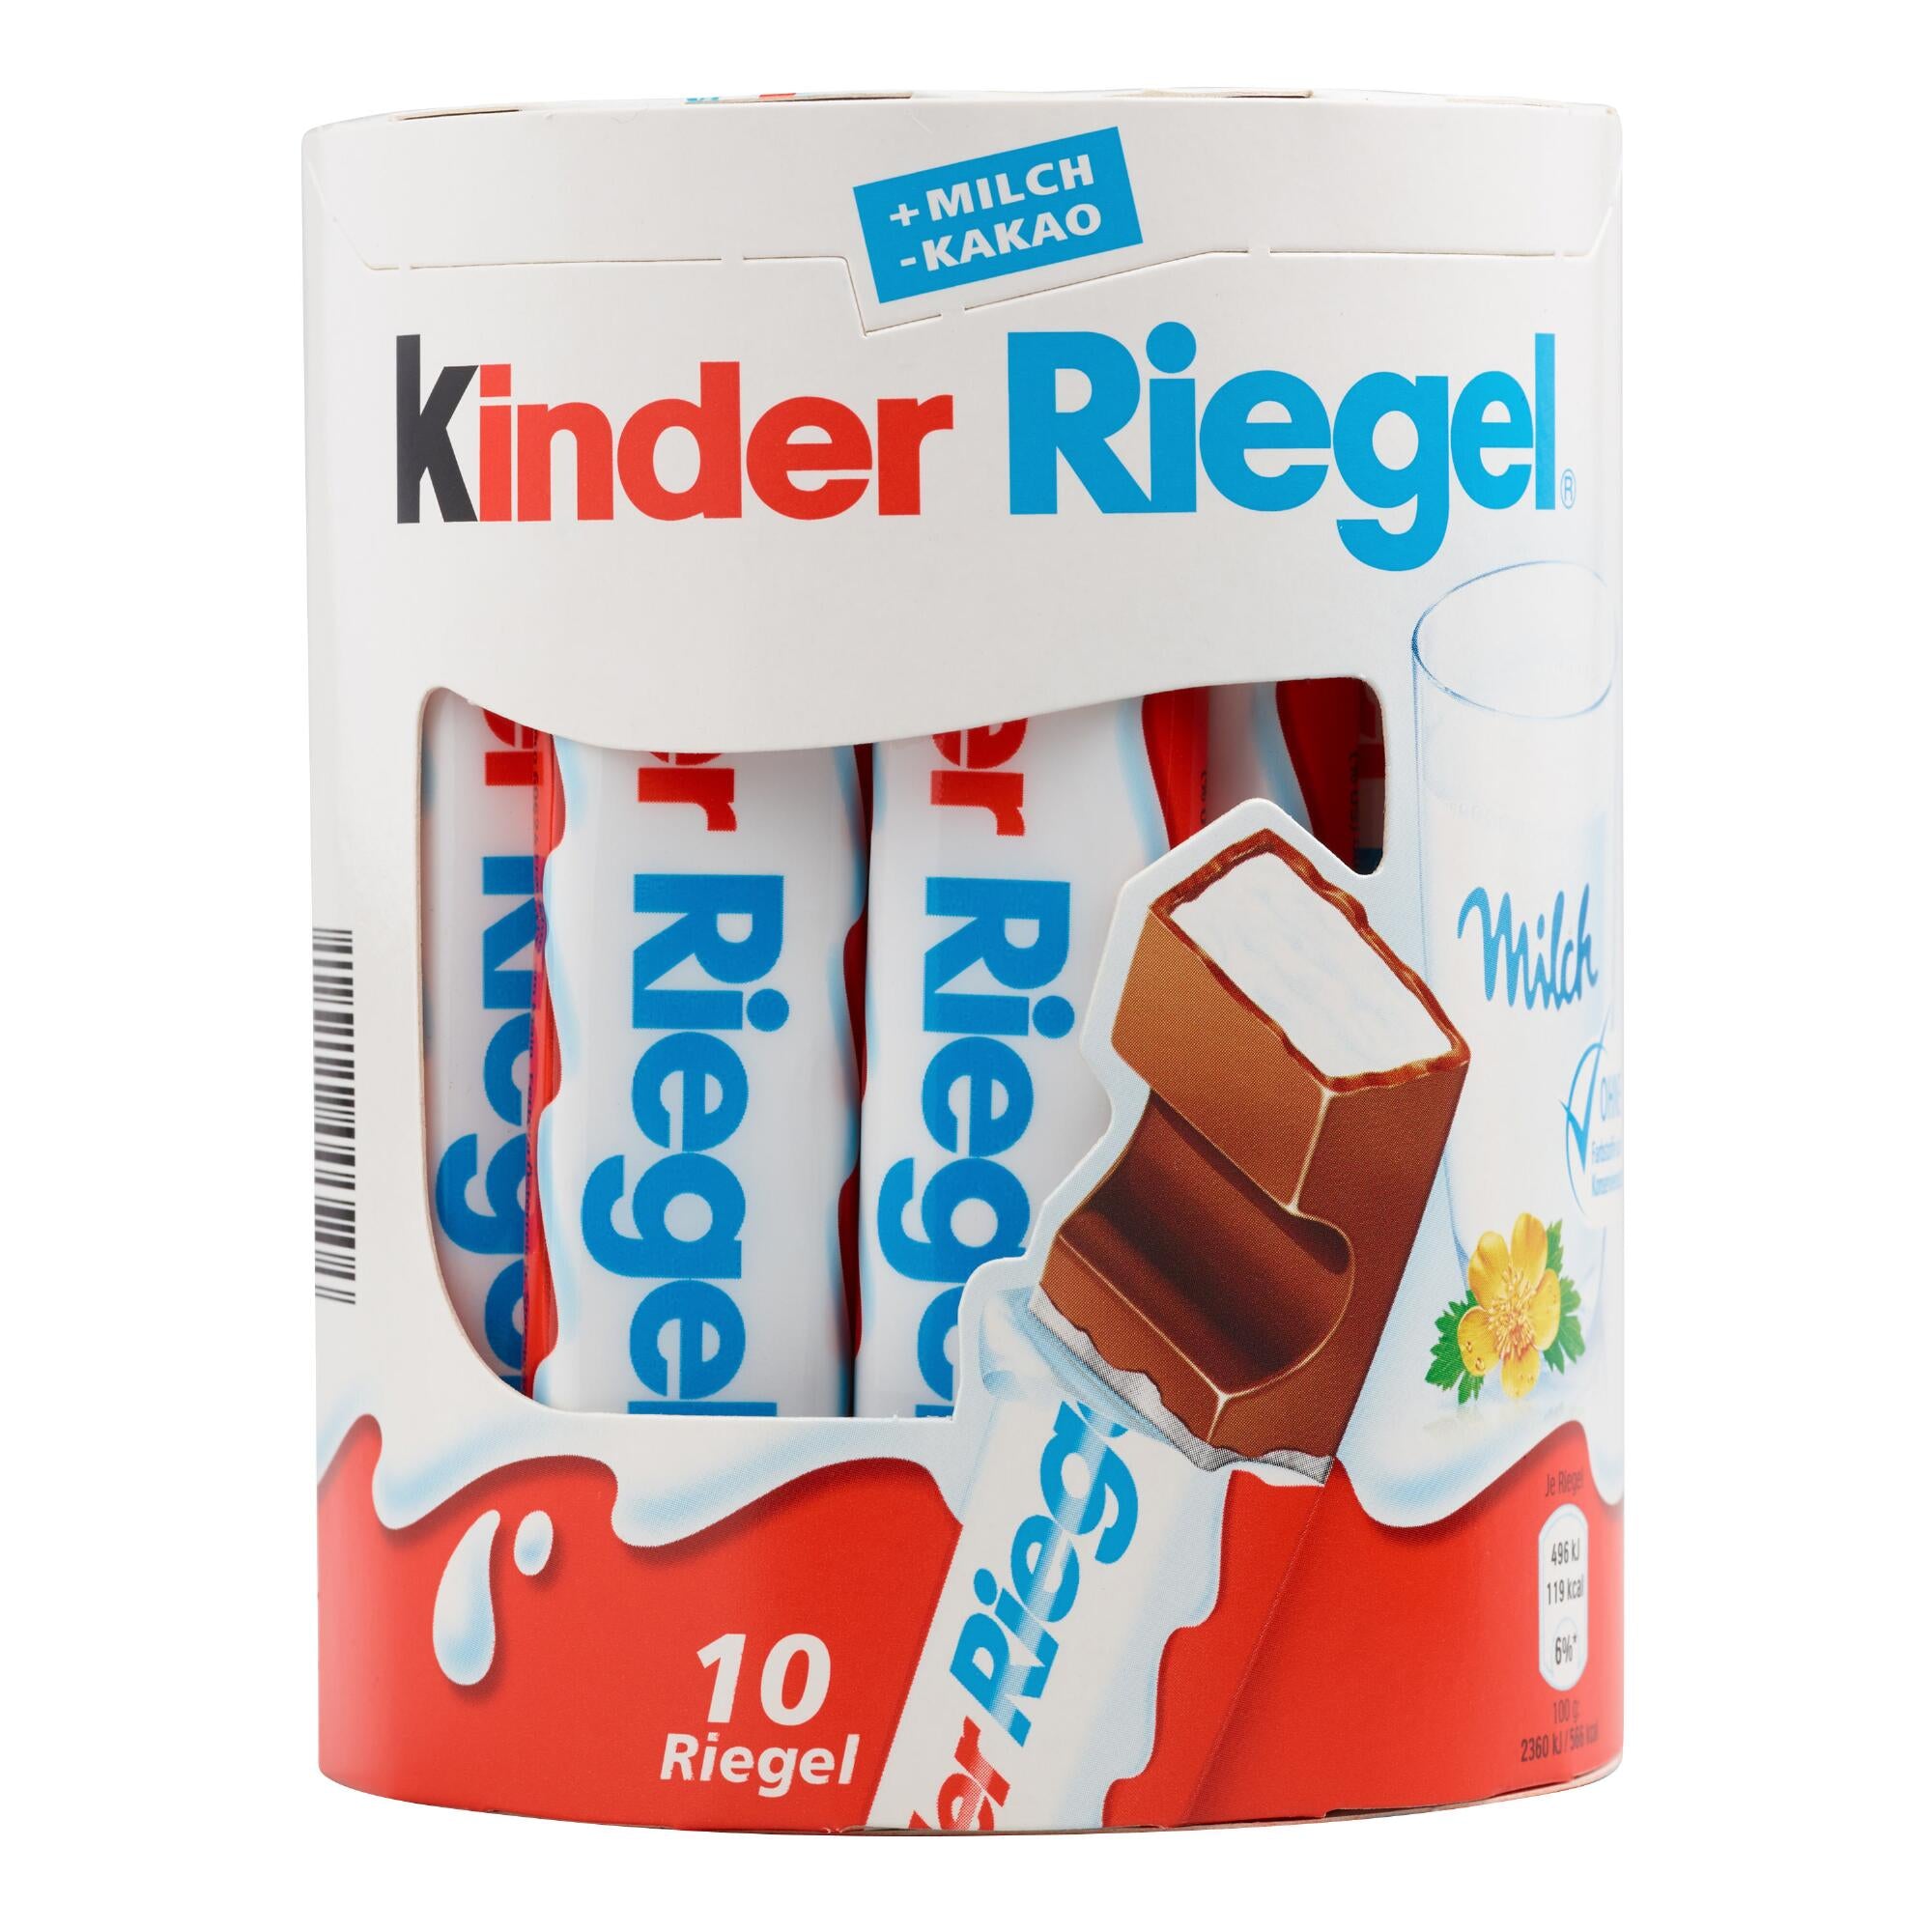 Kinder Riegel Milk Chocolate, 10 Bars – German Candy Shop LLC